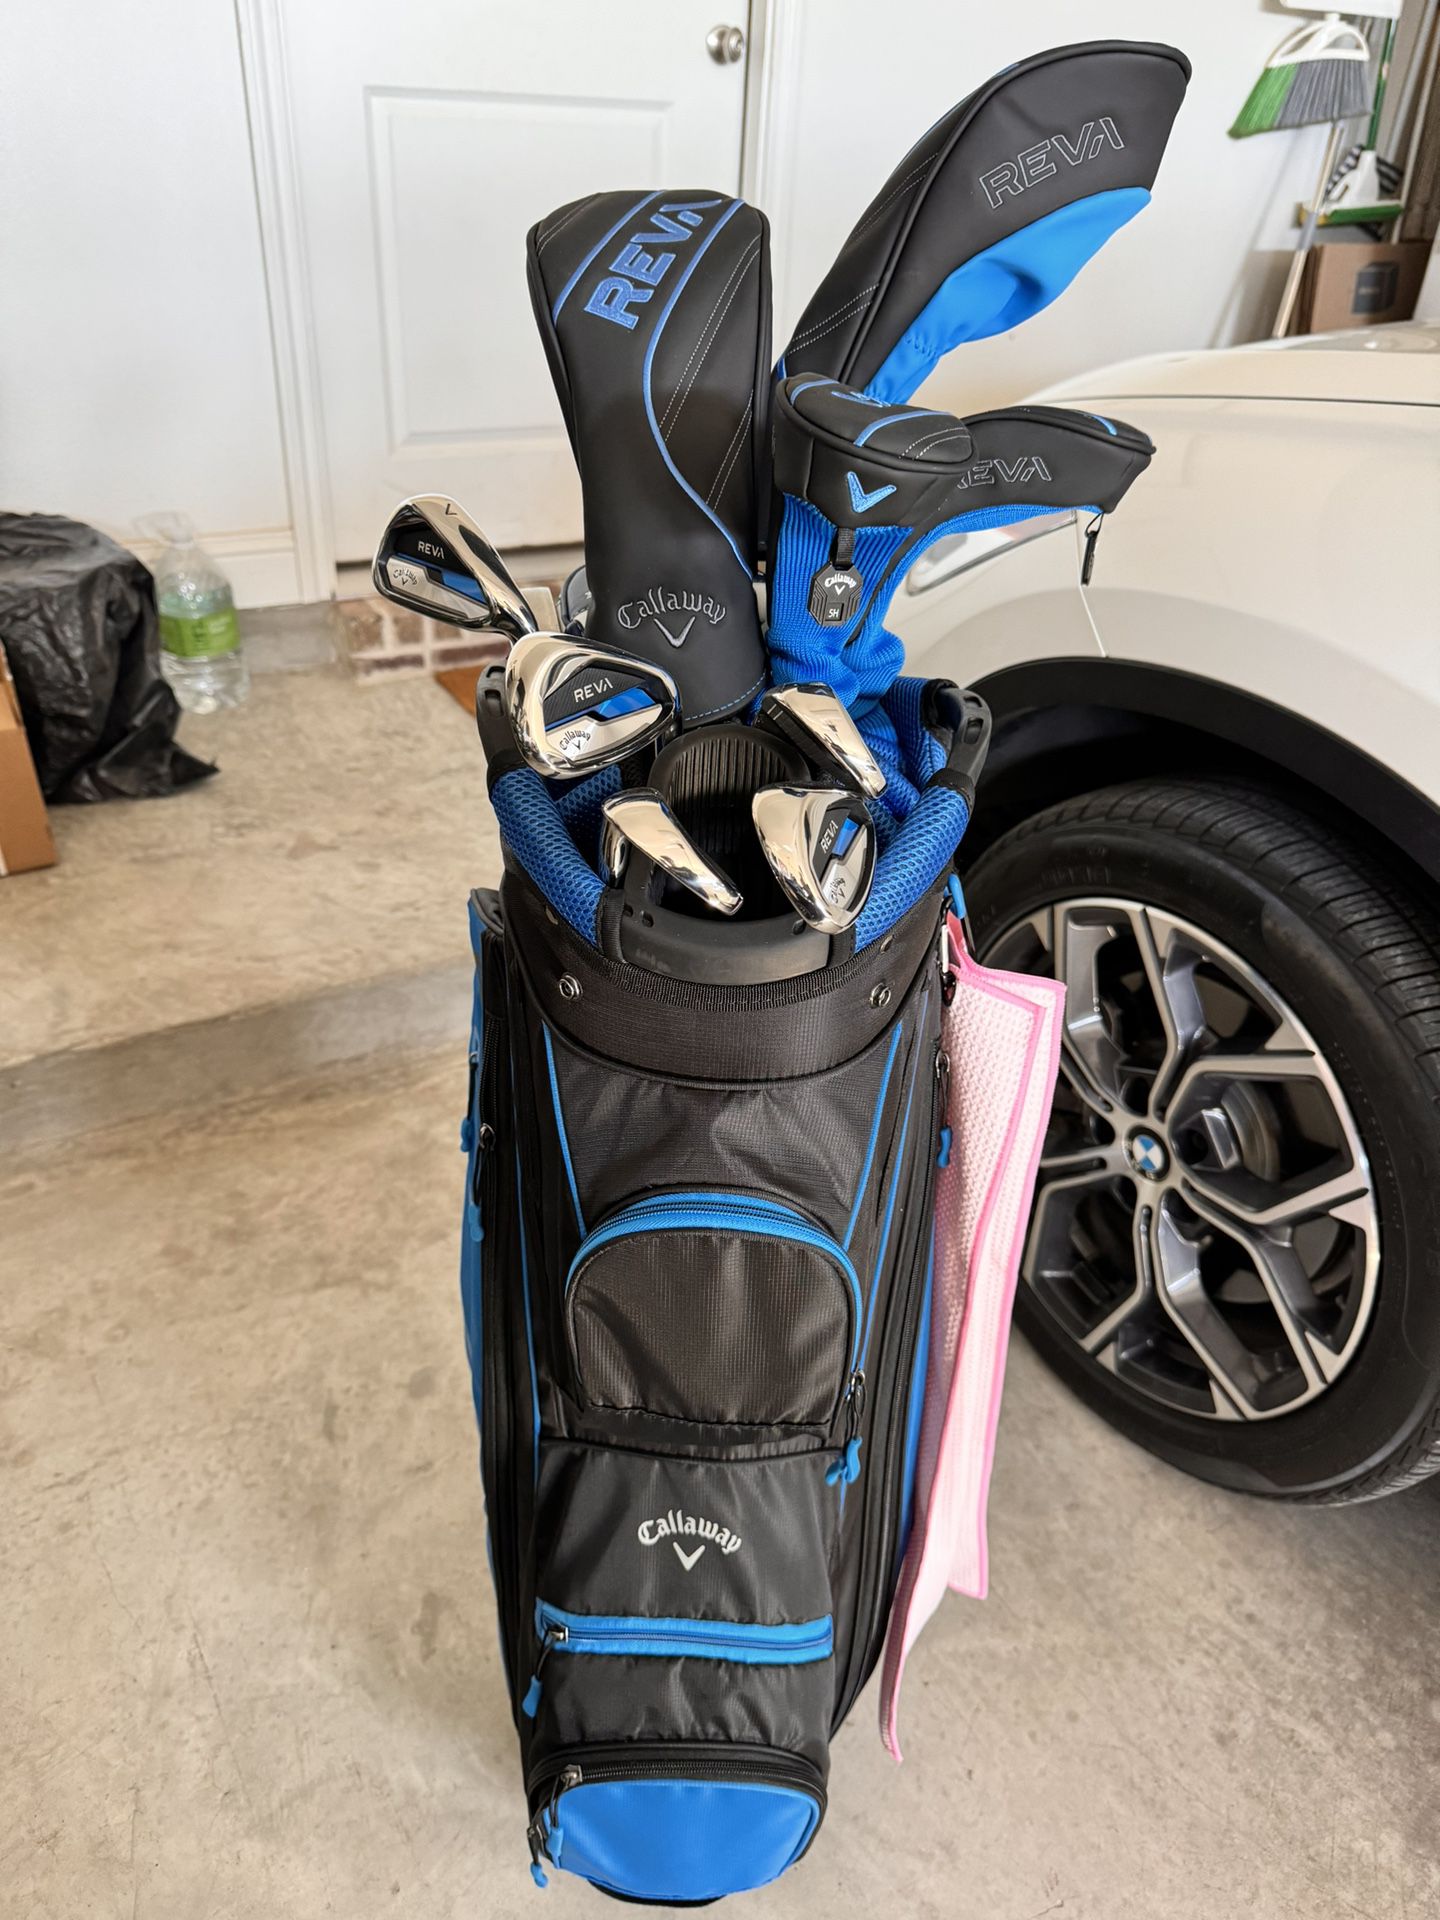 Ladies Calloway Reva Graphite Golf Clubs and Bag